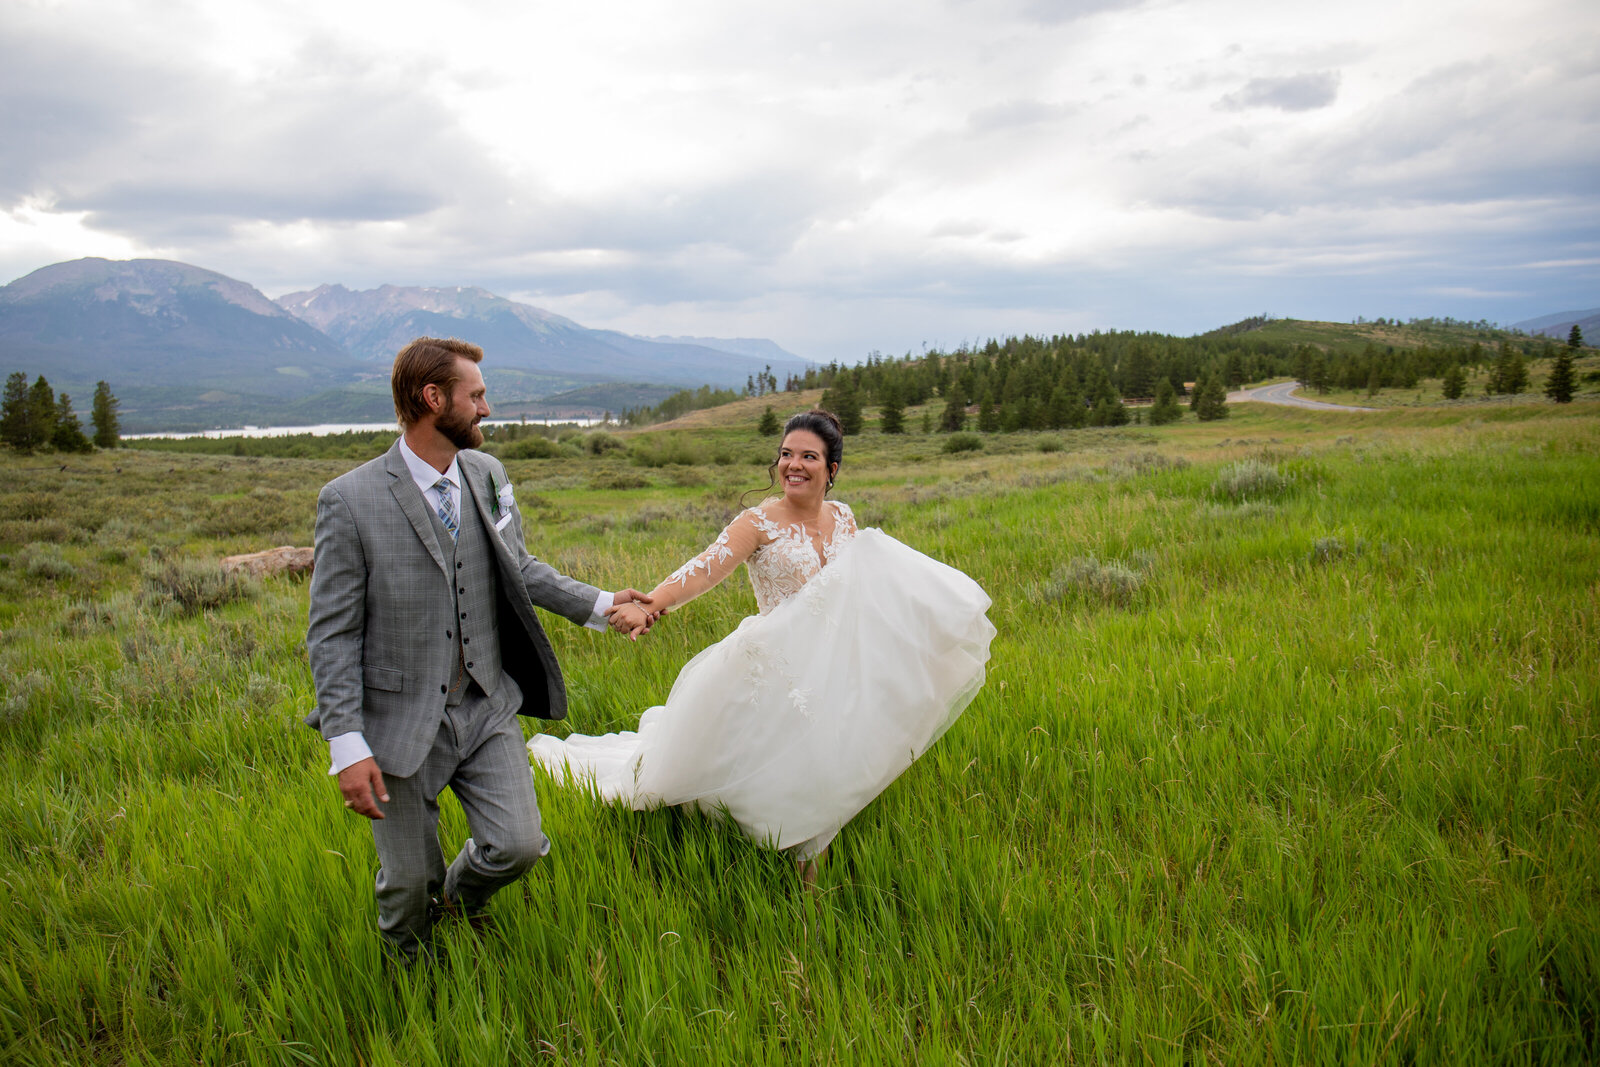 Colorado Springs elopement photographer